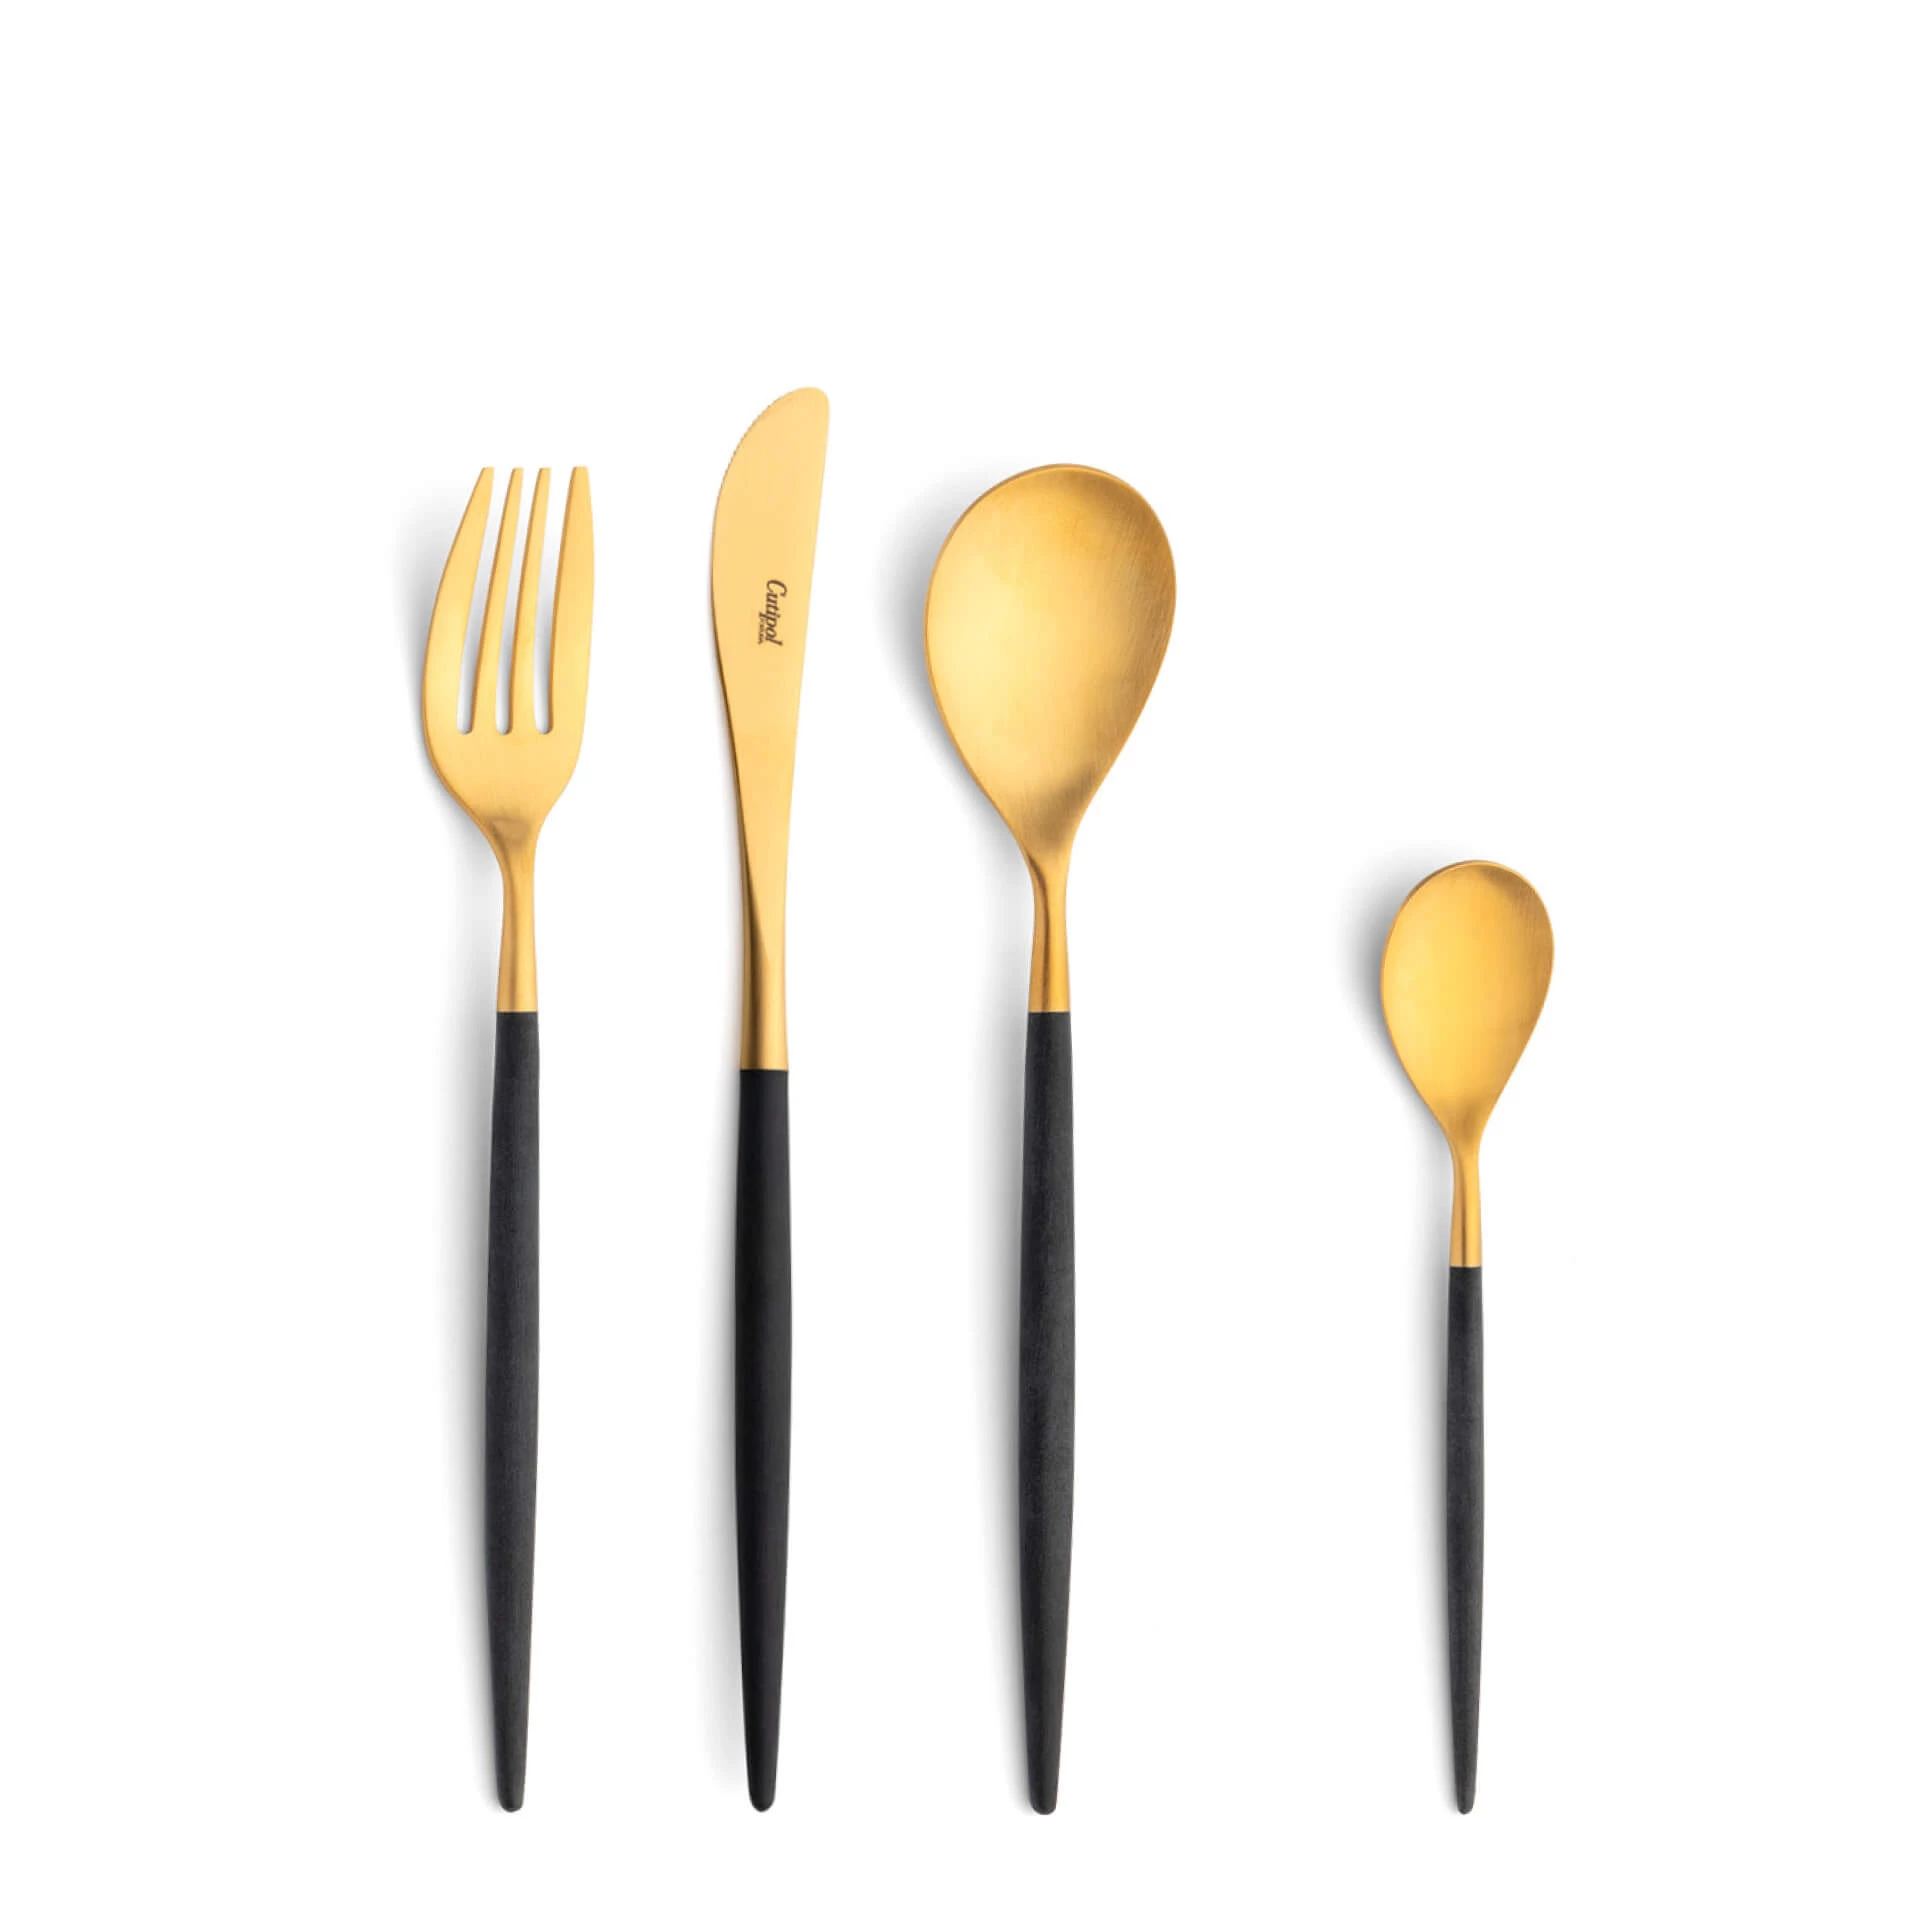 Cutipol Cutlery Mio Gold with dessert fork, dessert knife, dessert spoon and tea-coffee spoon